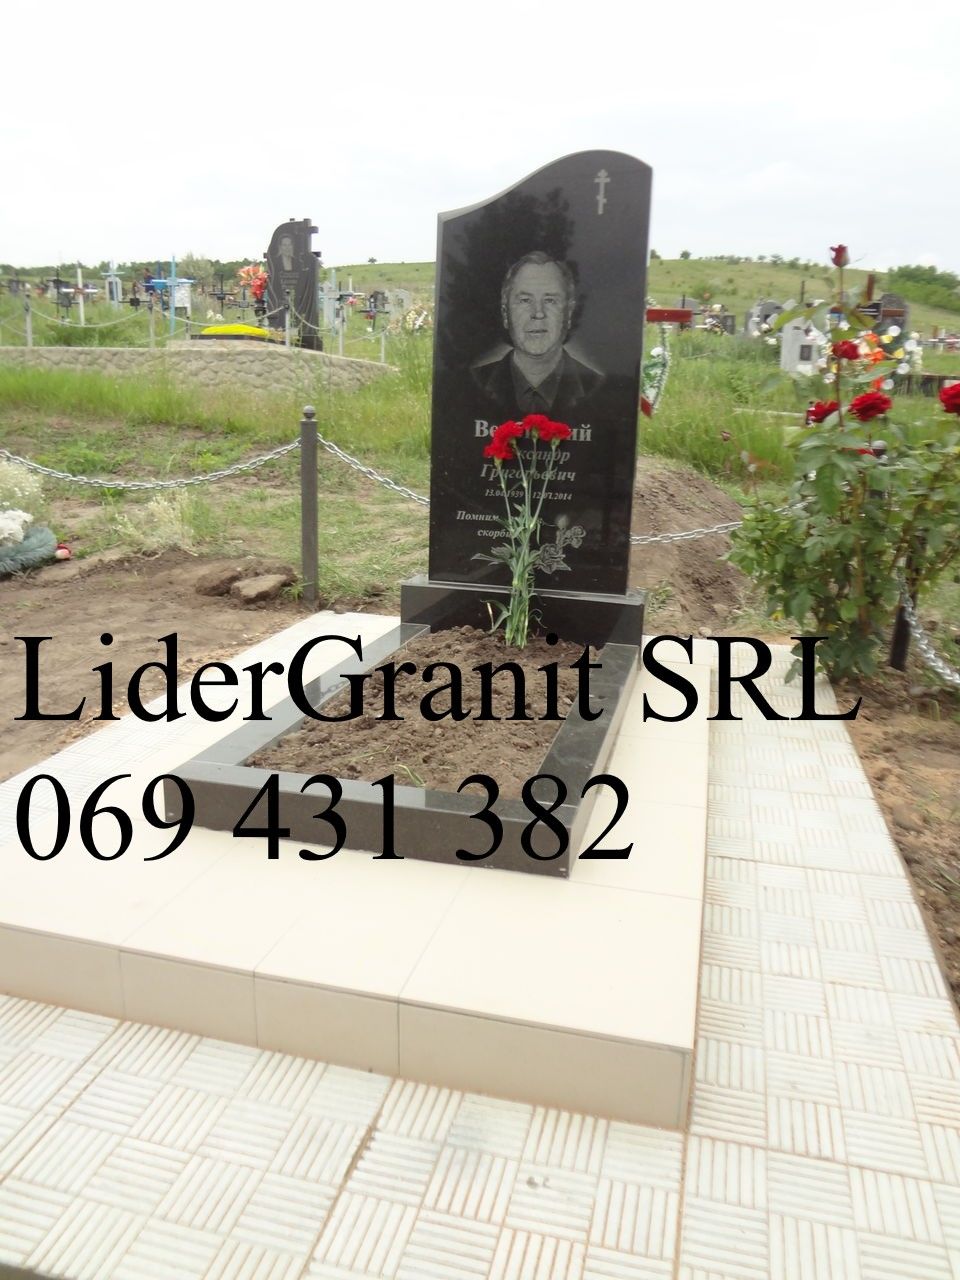 SRL LiderGranit propune monument gata din granit de la 5500 lei. foto 3